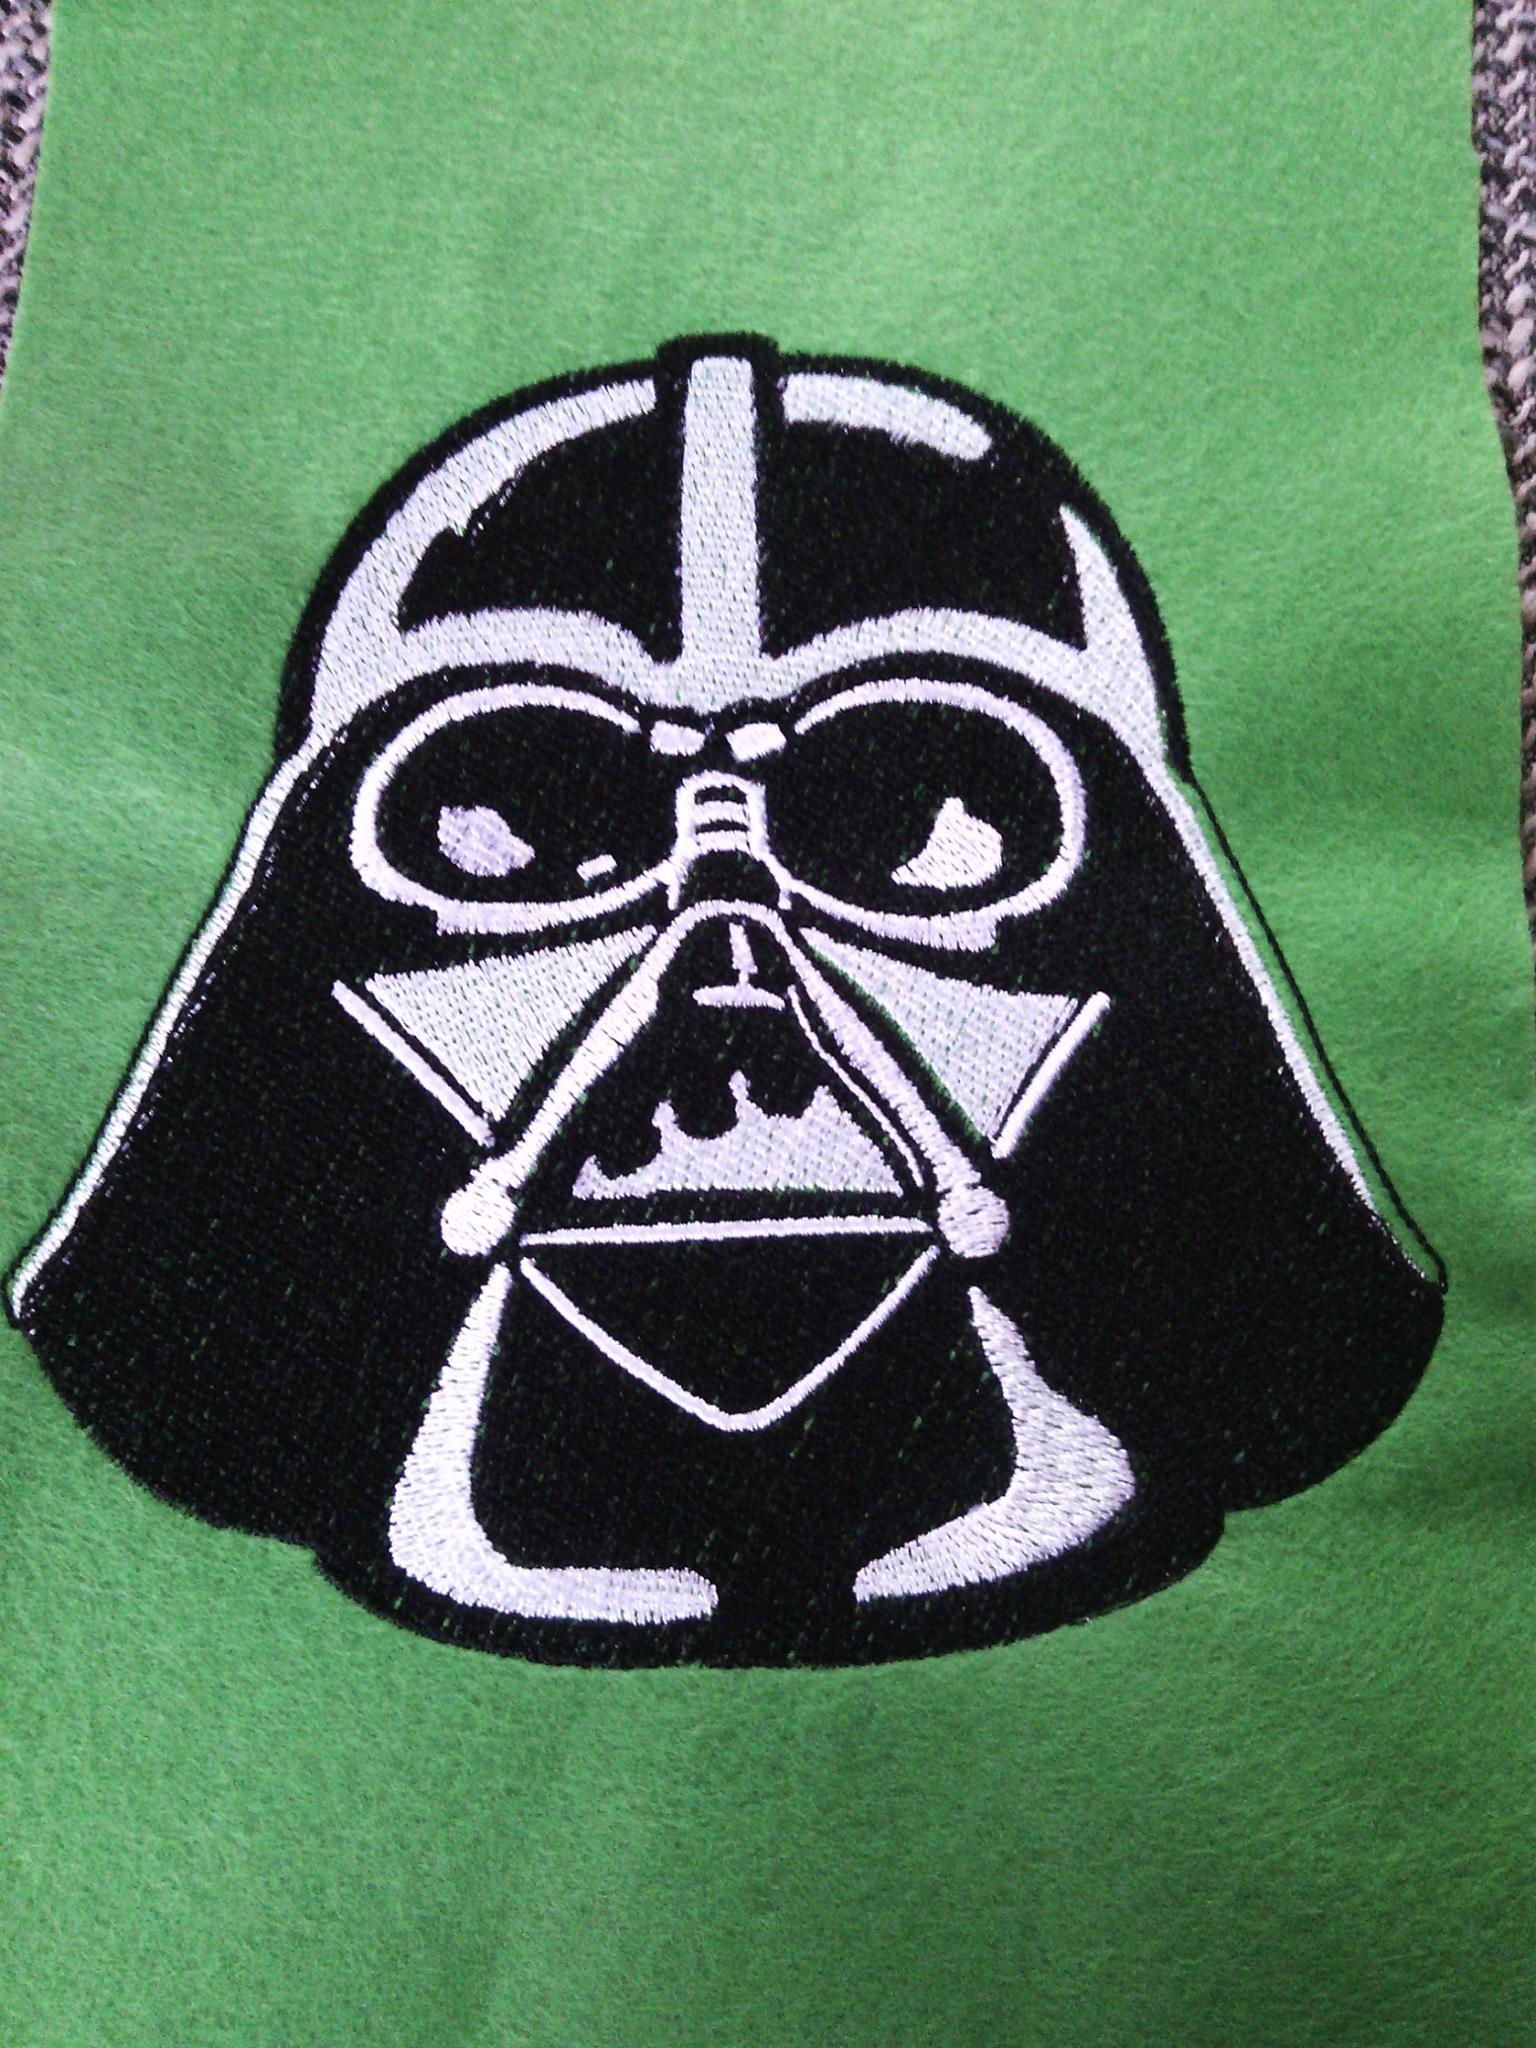 Darth Vader embroidery design